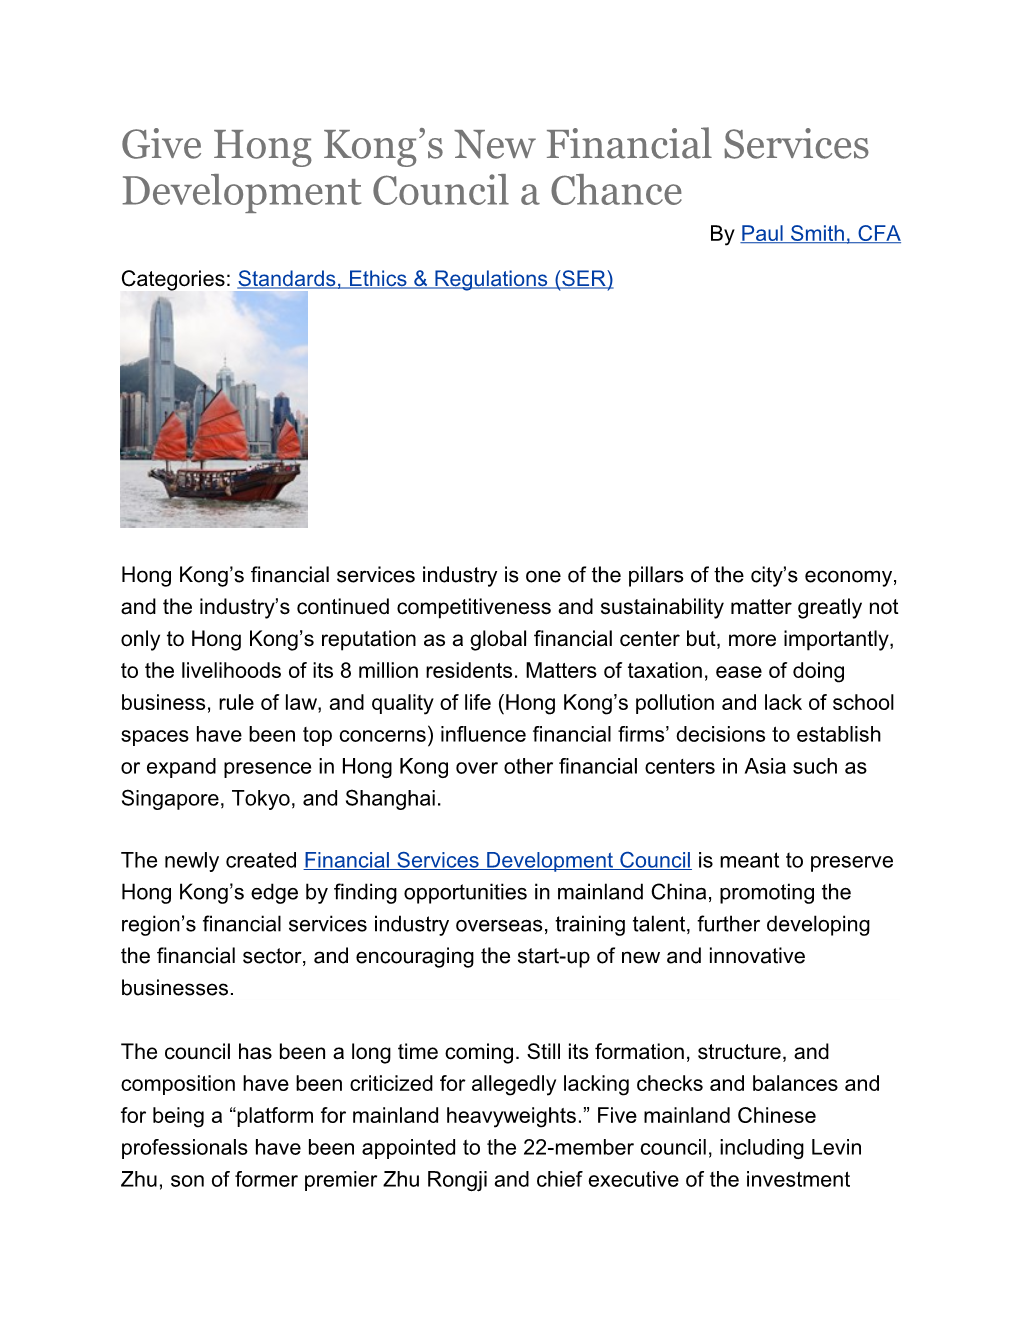 Give Hong Kong S New Financial Services Development Council a Chance